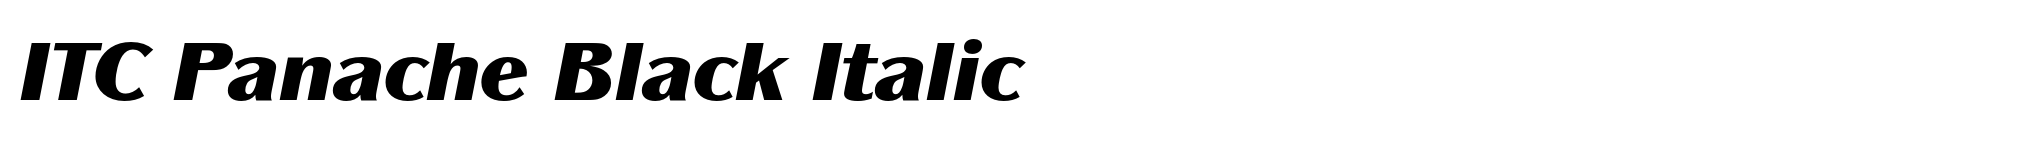 ITC Panache Black Italic image